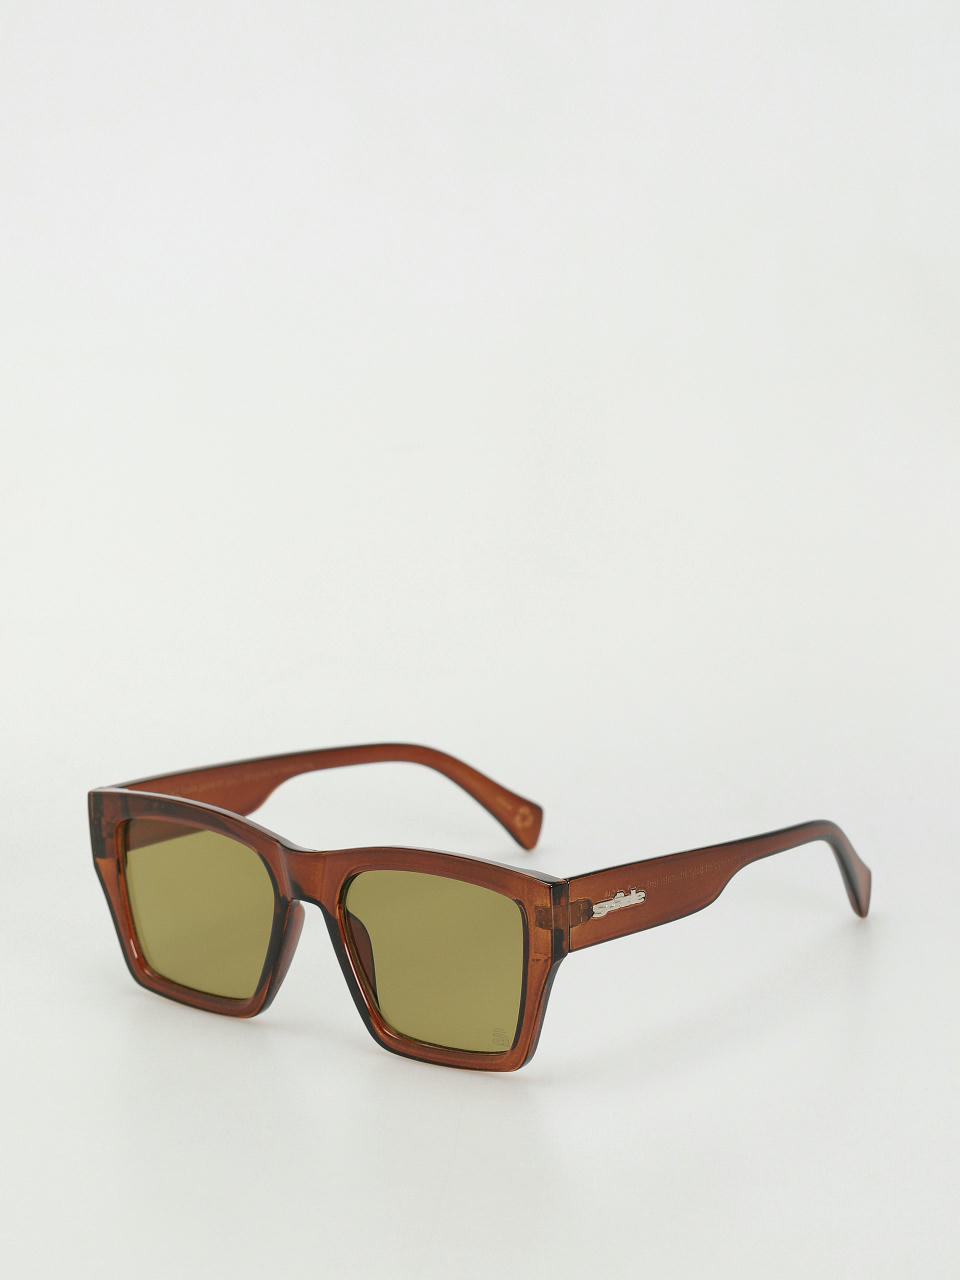 Szade Sharp Sunglasses (new spice/caper)